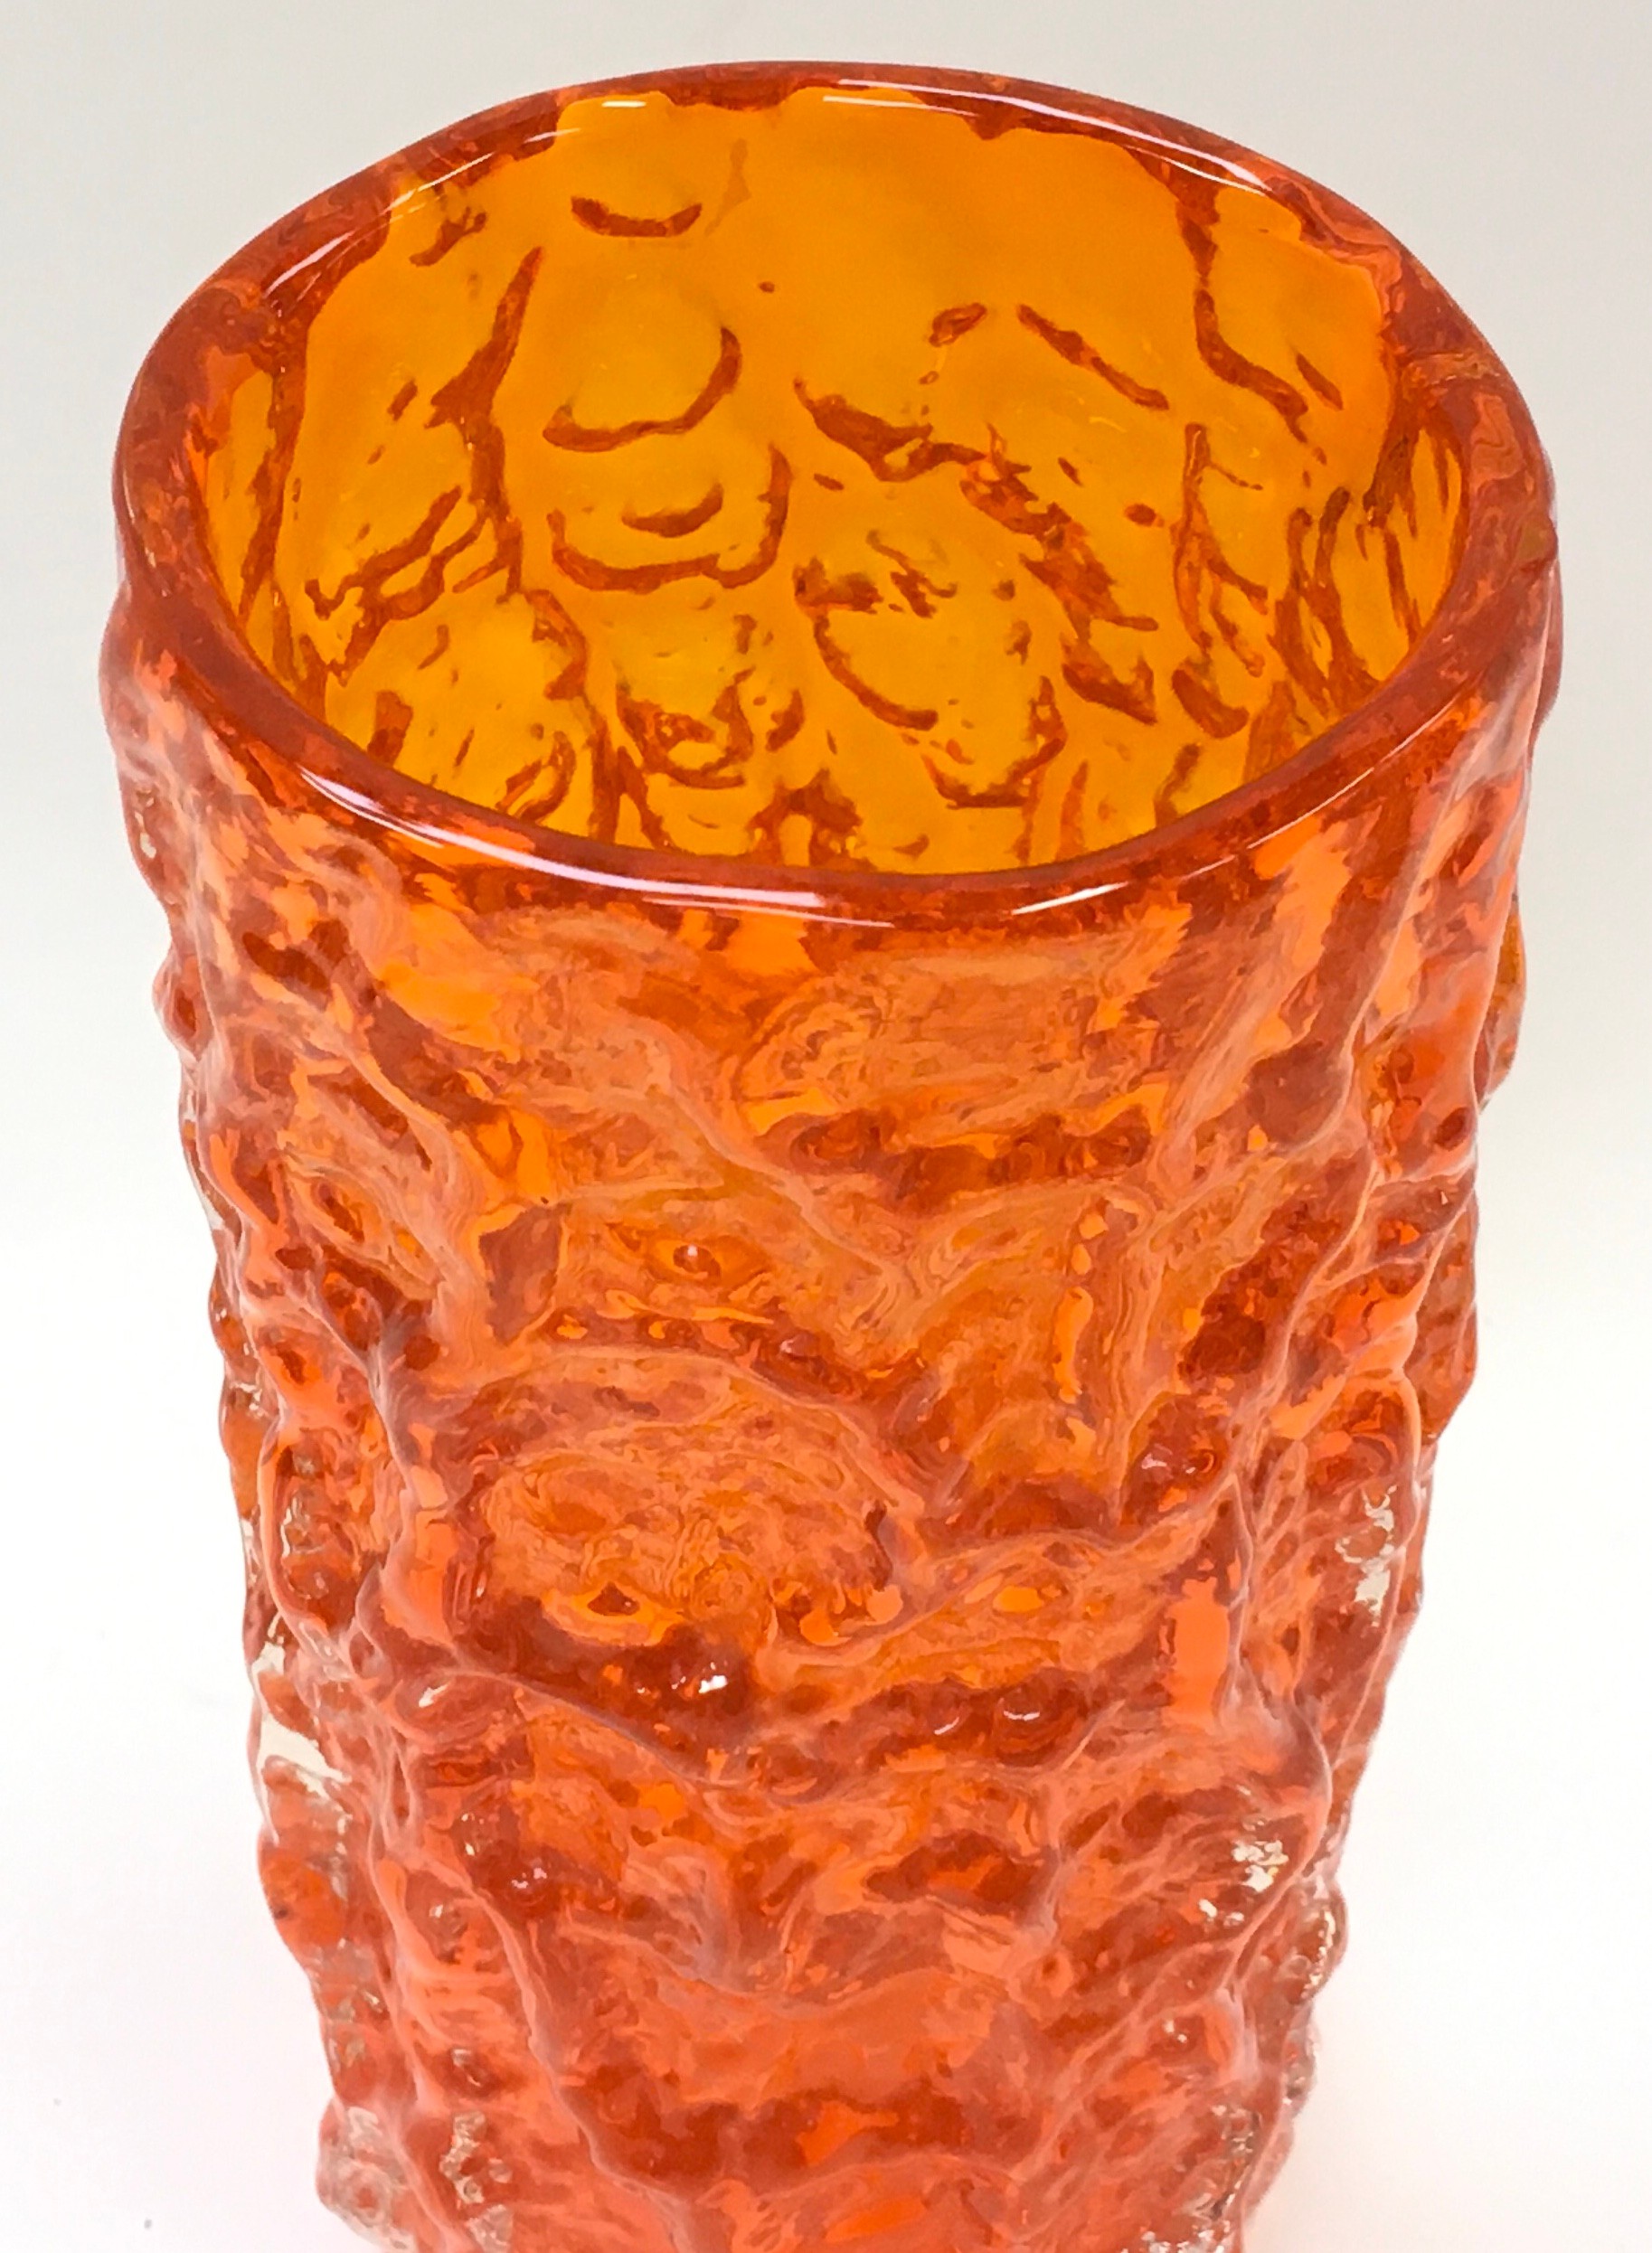 Whitefriars Tangerine textured glass vase designed by Geoffrey Baxter 20 cm high 8.5cm diameter. - Image 2 of 5